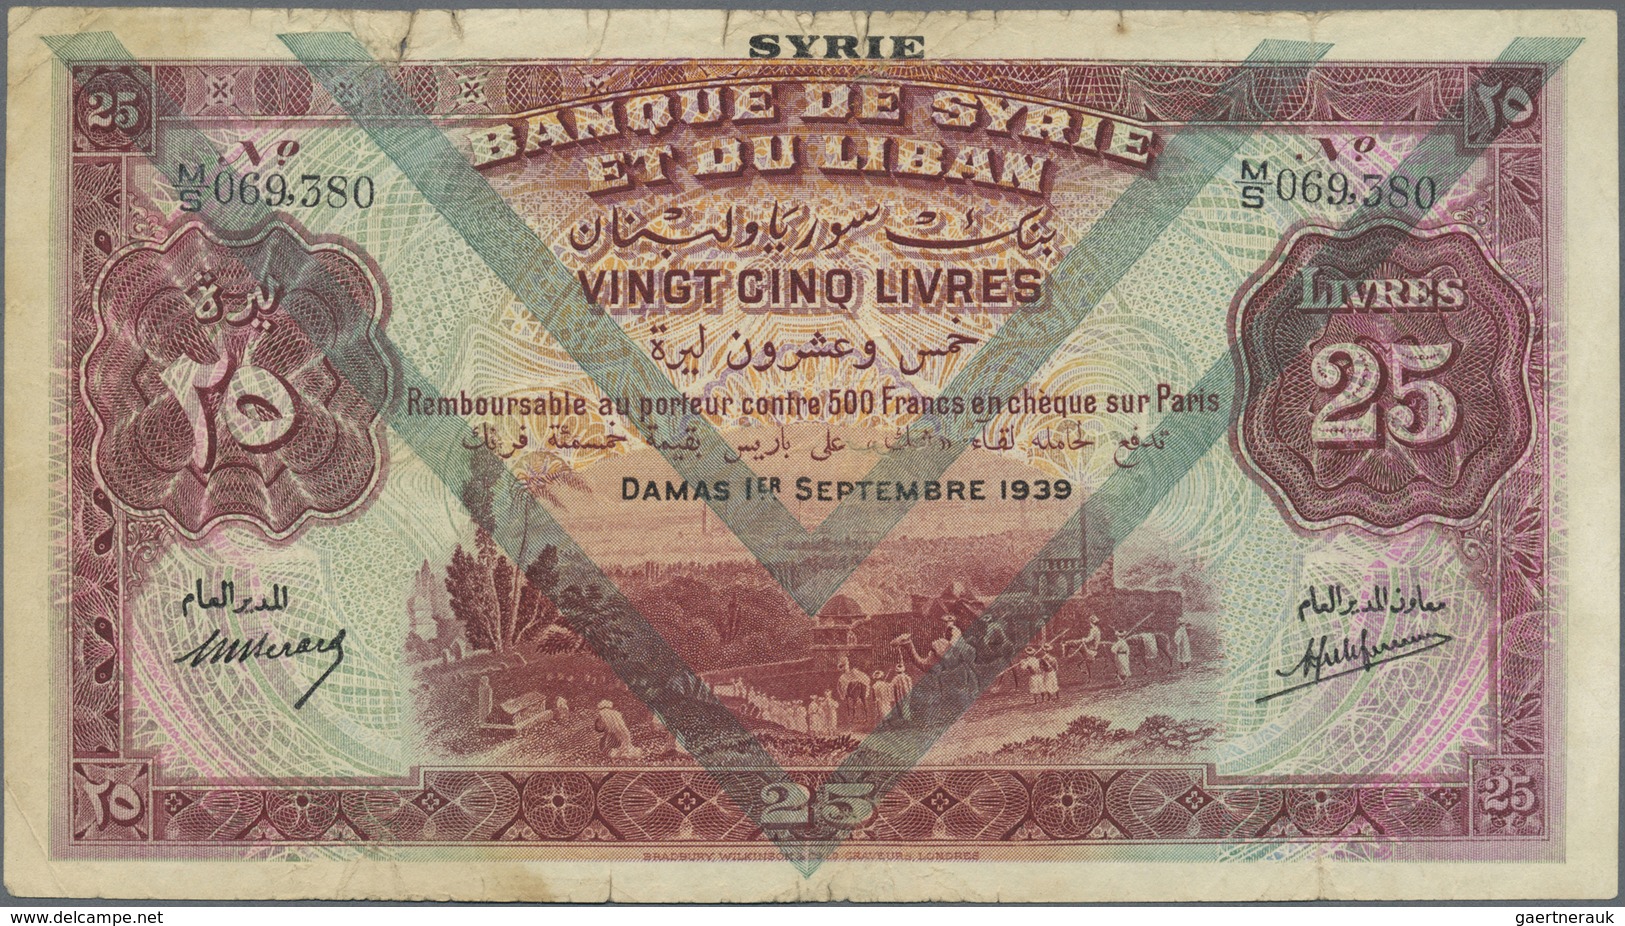 Syria / Syrien: Banque De Syrie Et Du Liban 25 Livres September 1st 1939, Great Item In Still Nice C - Syria